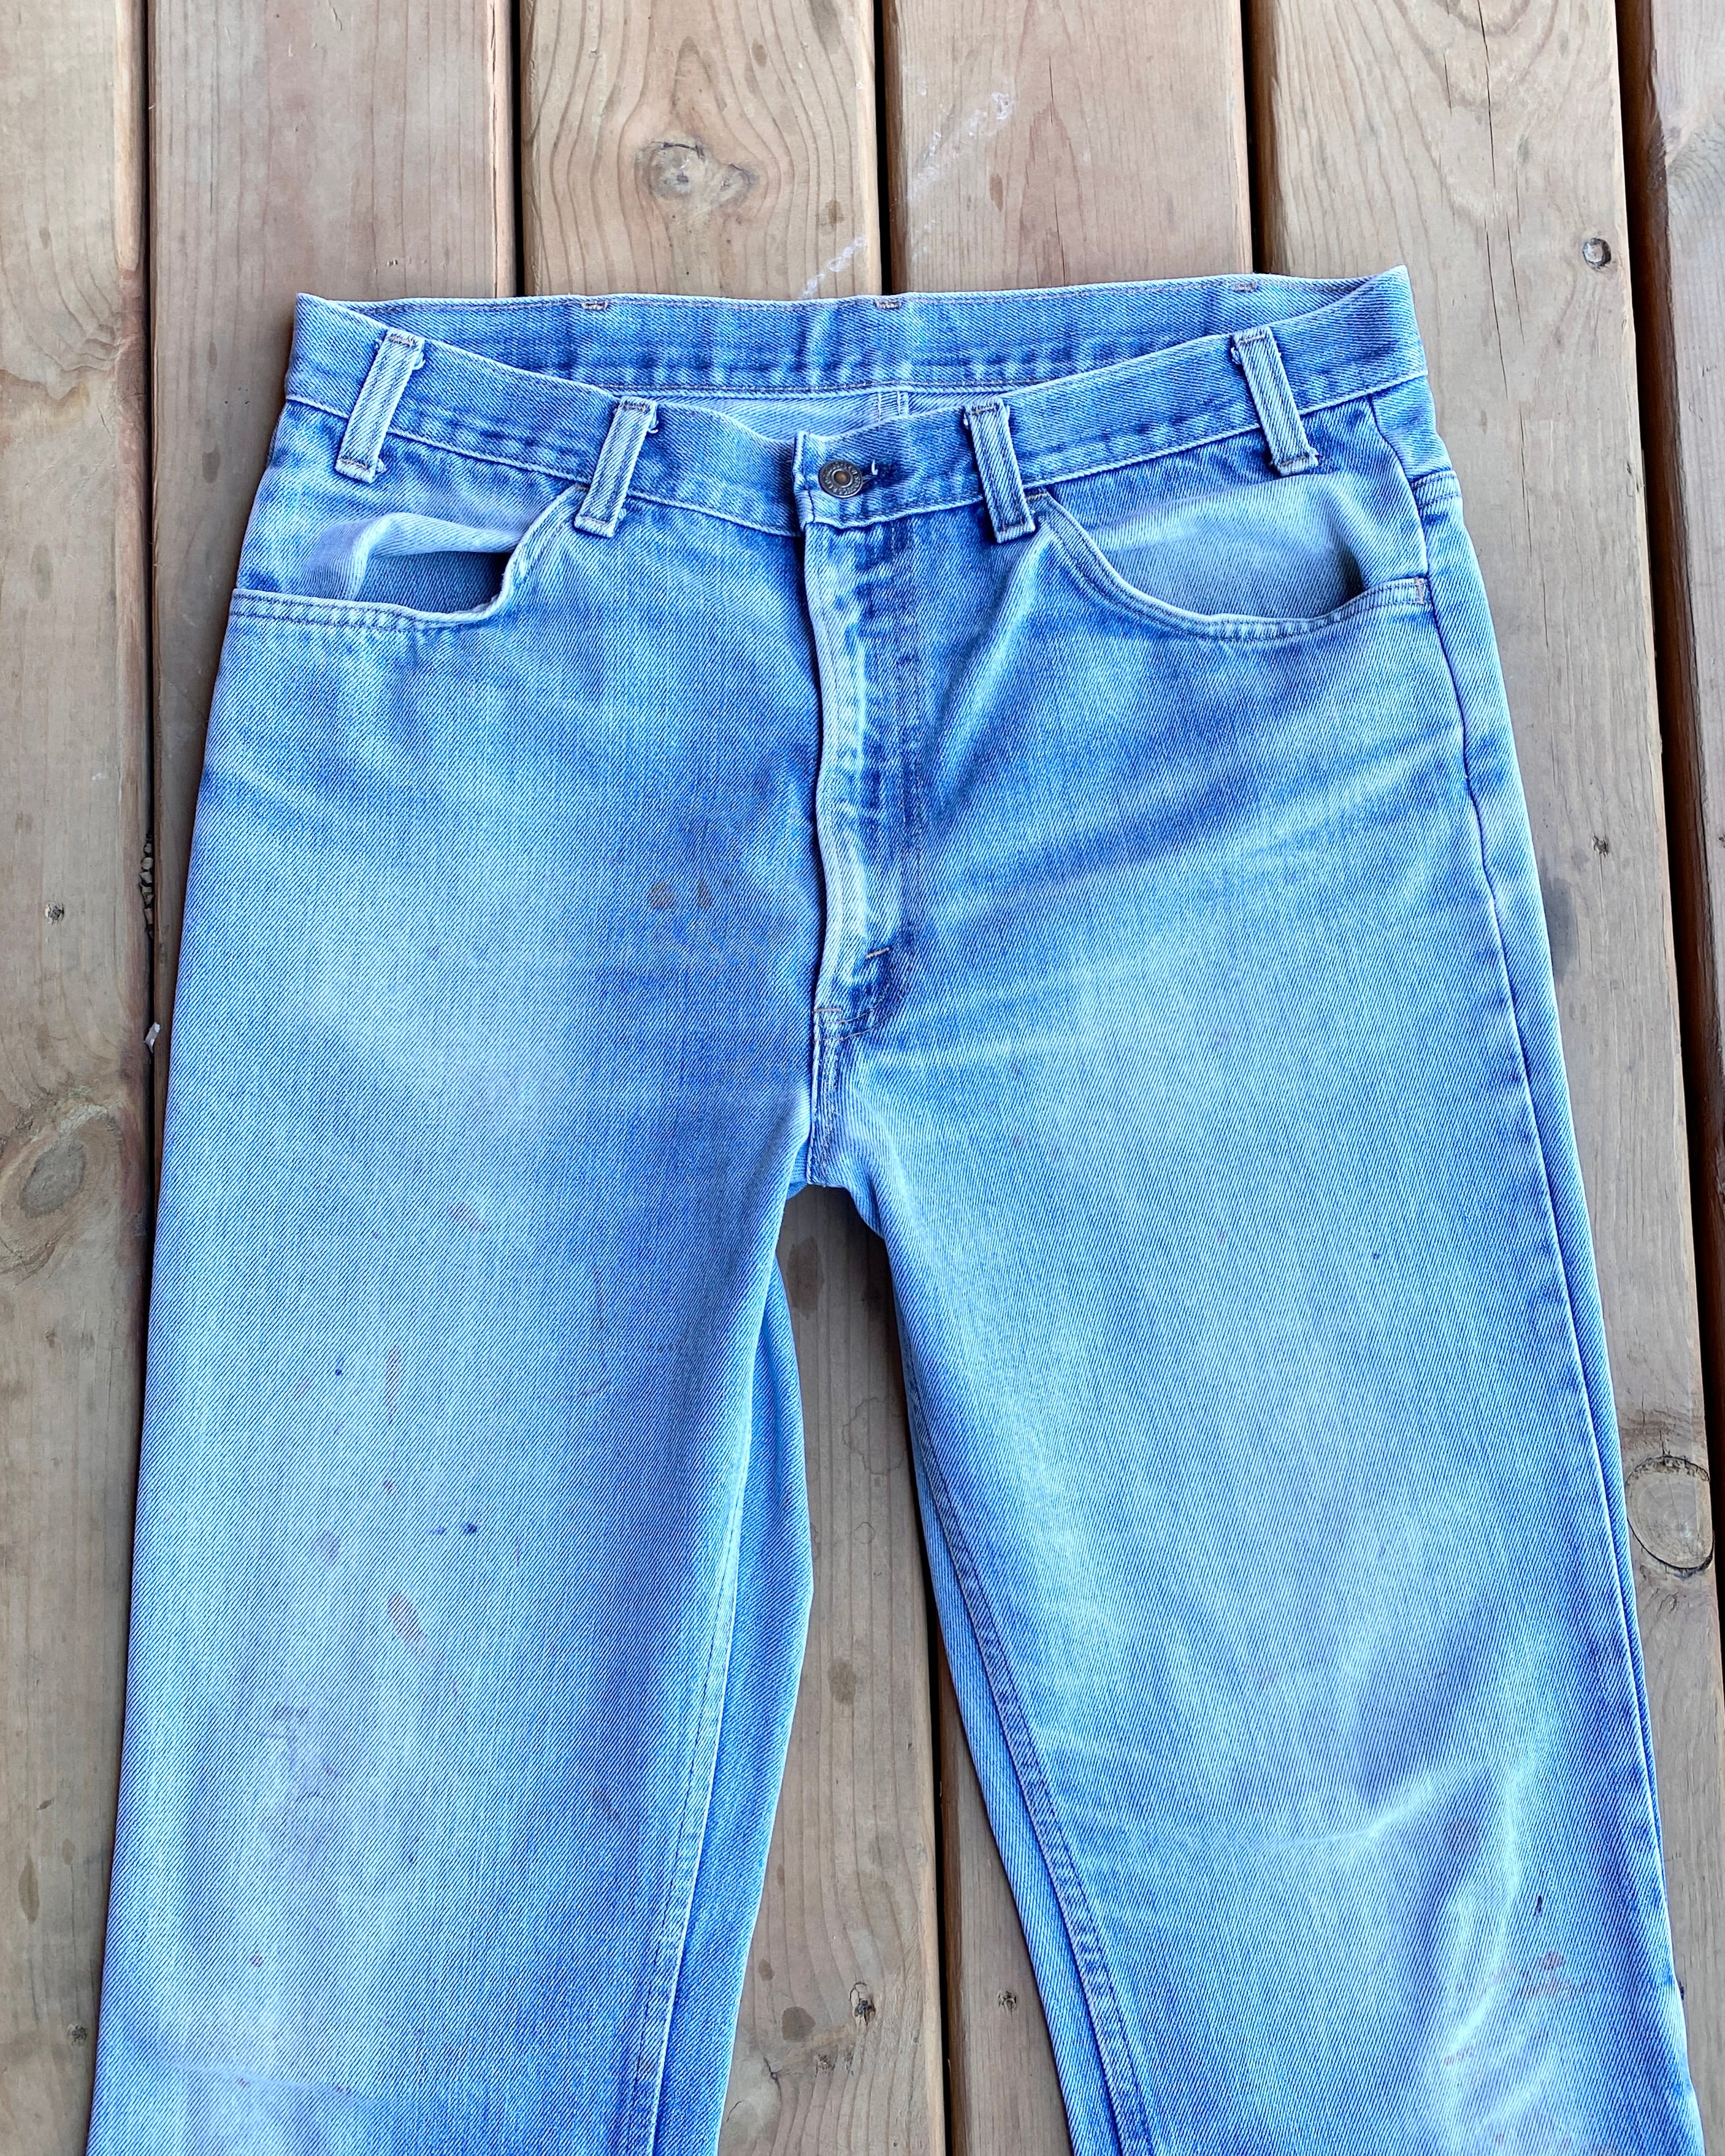 Vintage 1970s Levis Flare Orange Tab Jeans Light Wash size 34 Made in USA